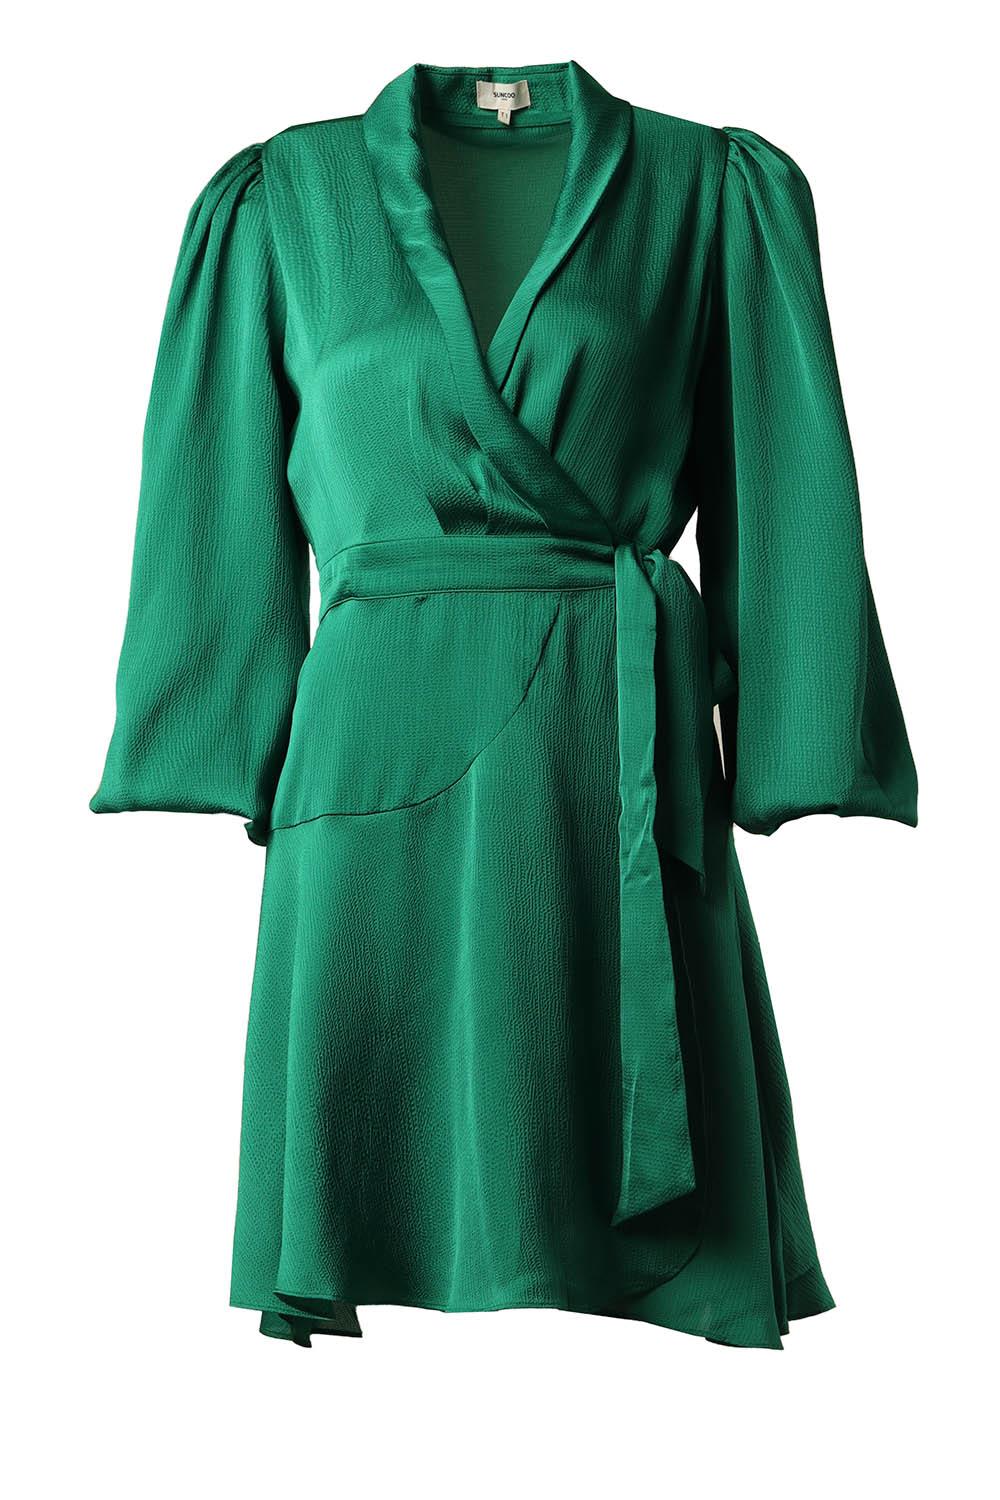 Suncoo Satijnen overslag jurk Clun groen